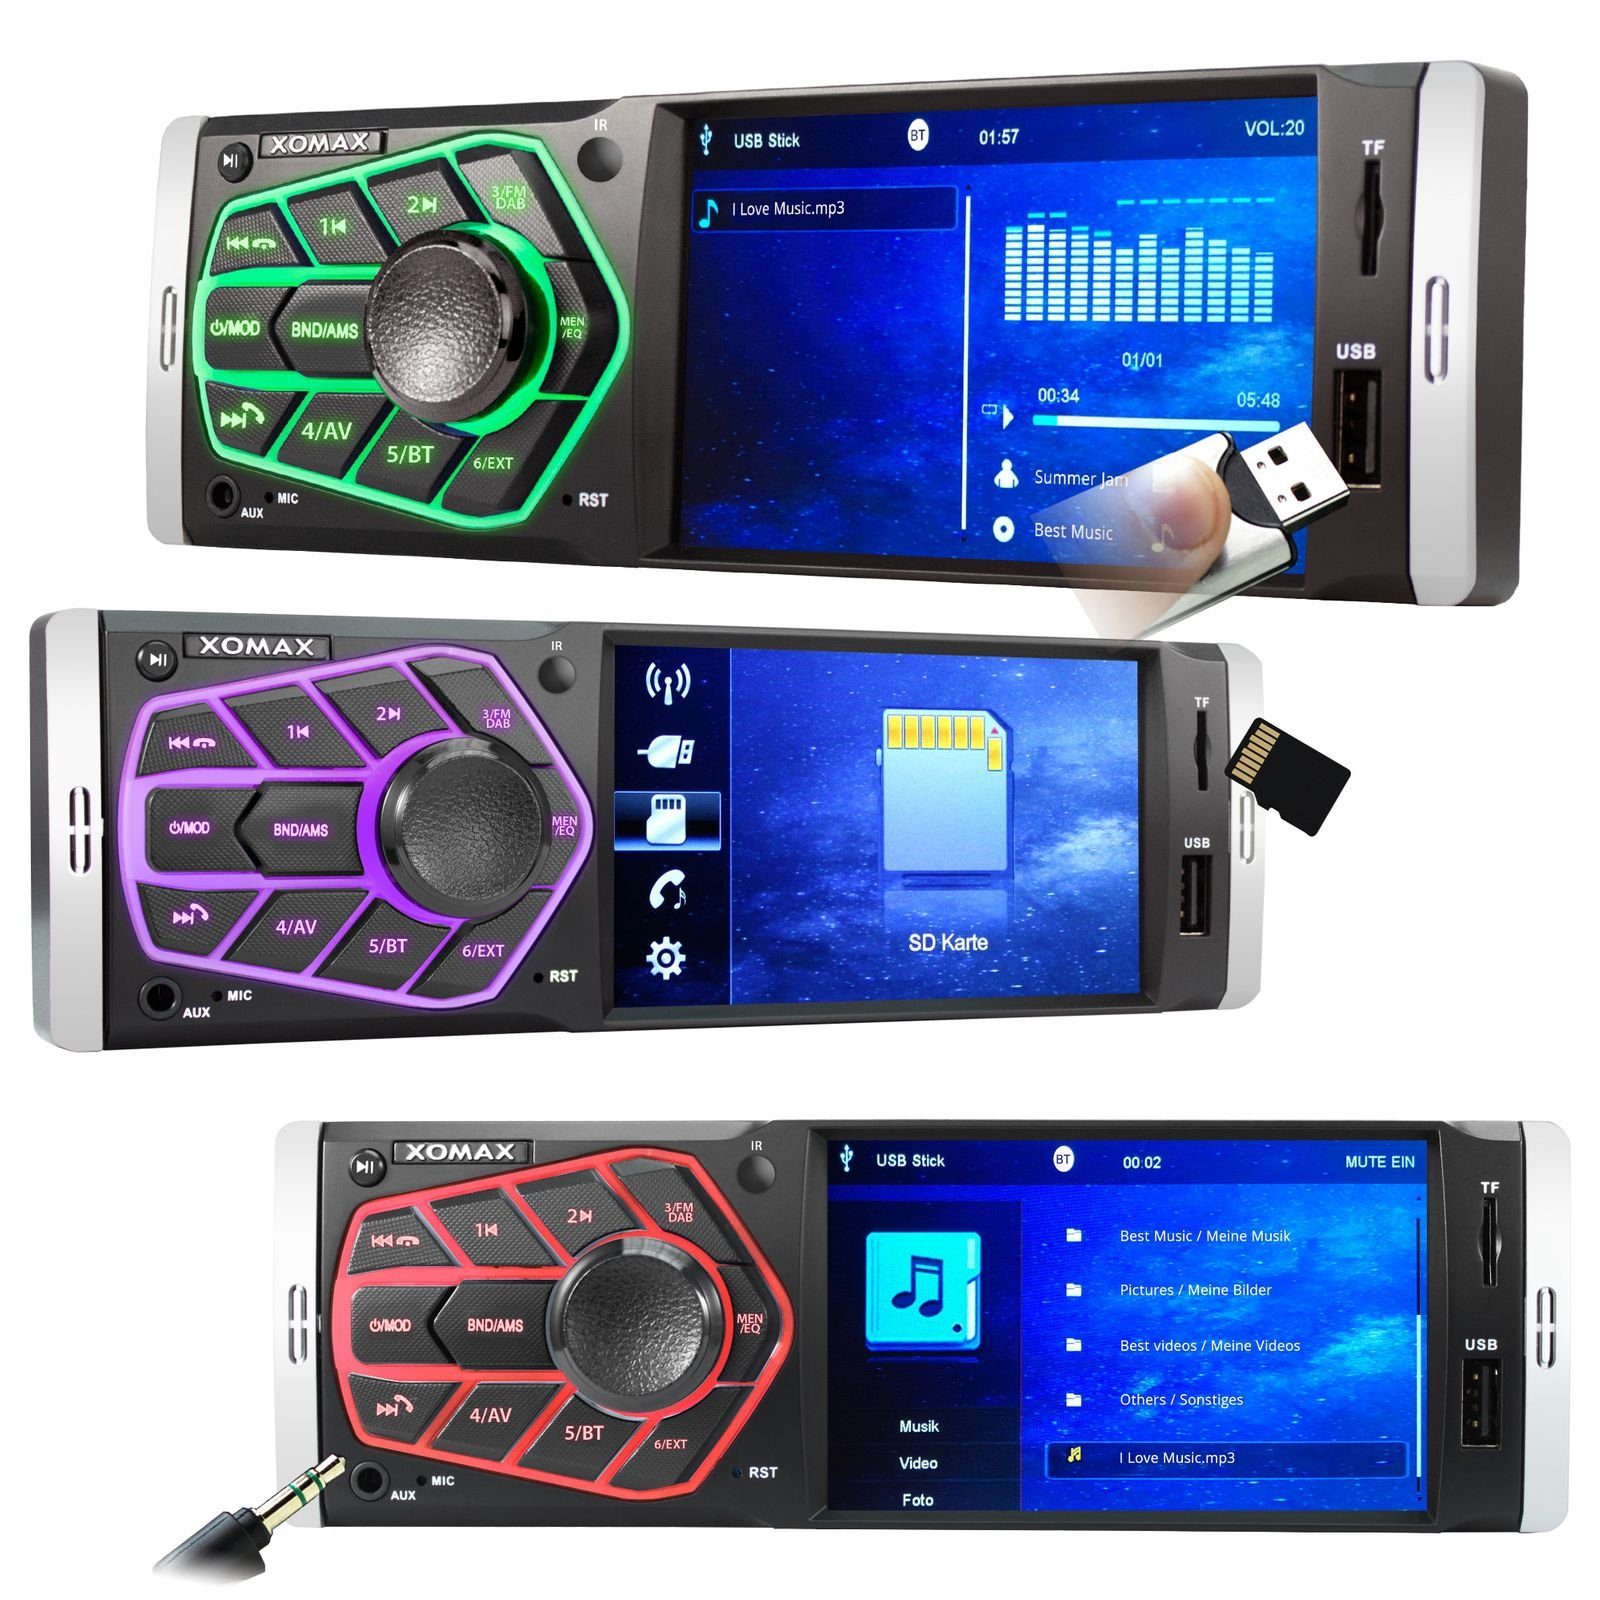 Autoradio Bluetooth XM-V418 Autoradio plus DAB 1 Bildschirm mit DIN XOMAX Touchscreen